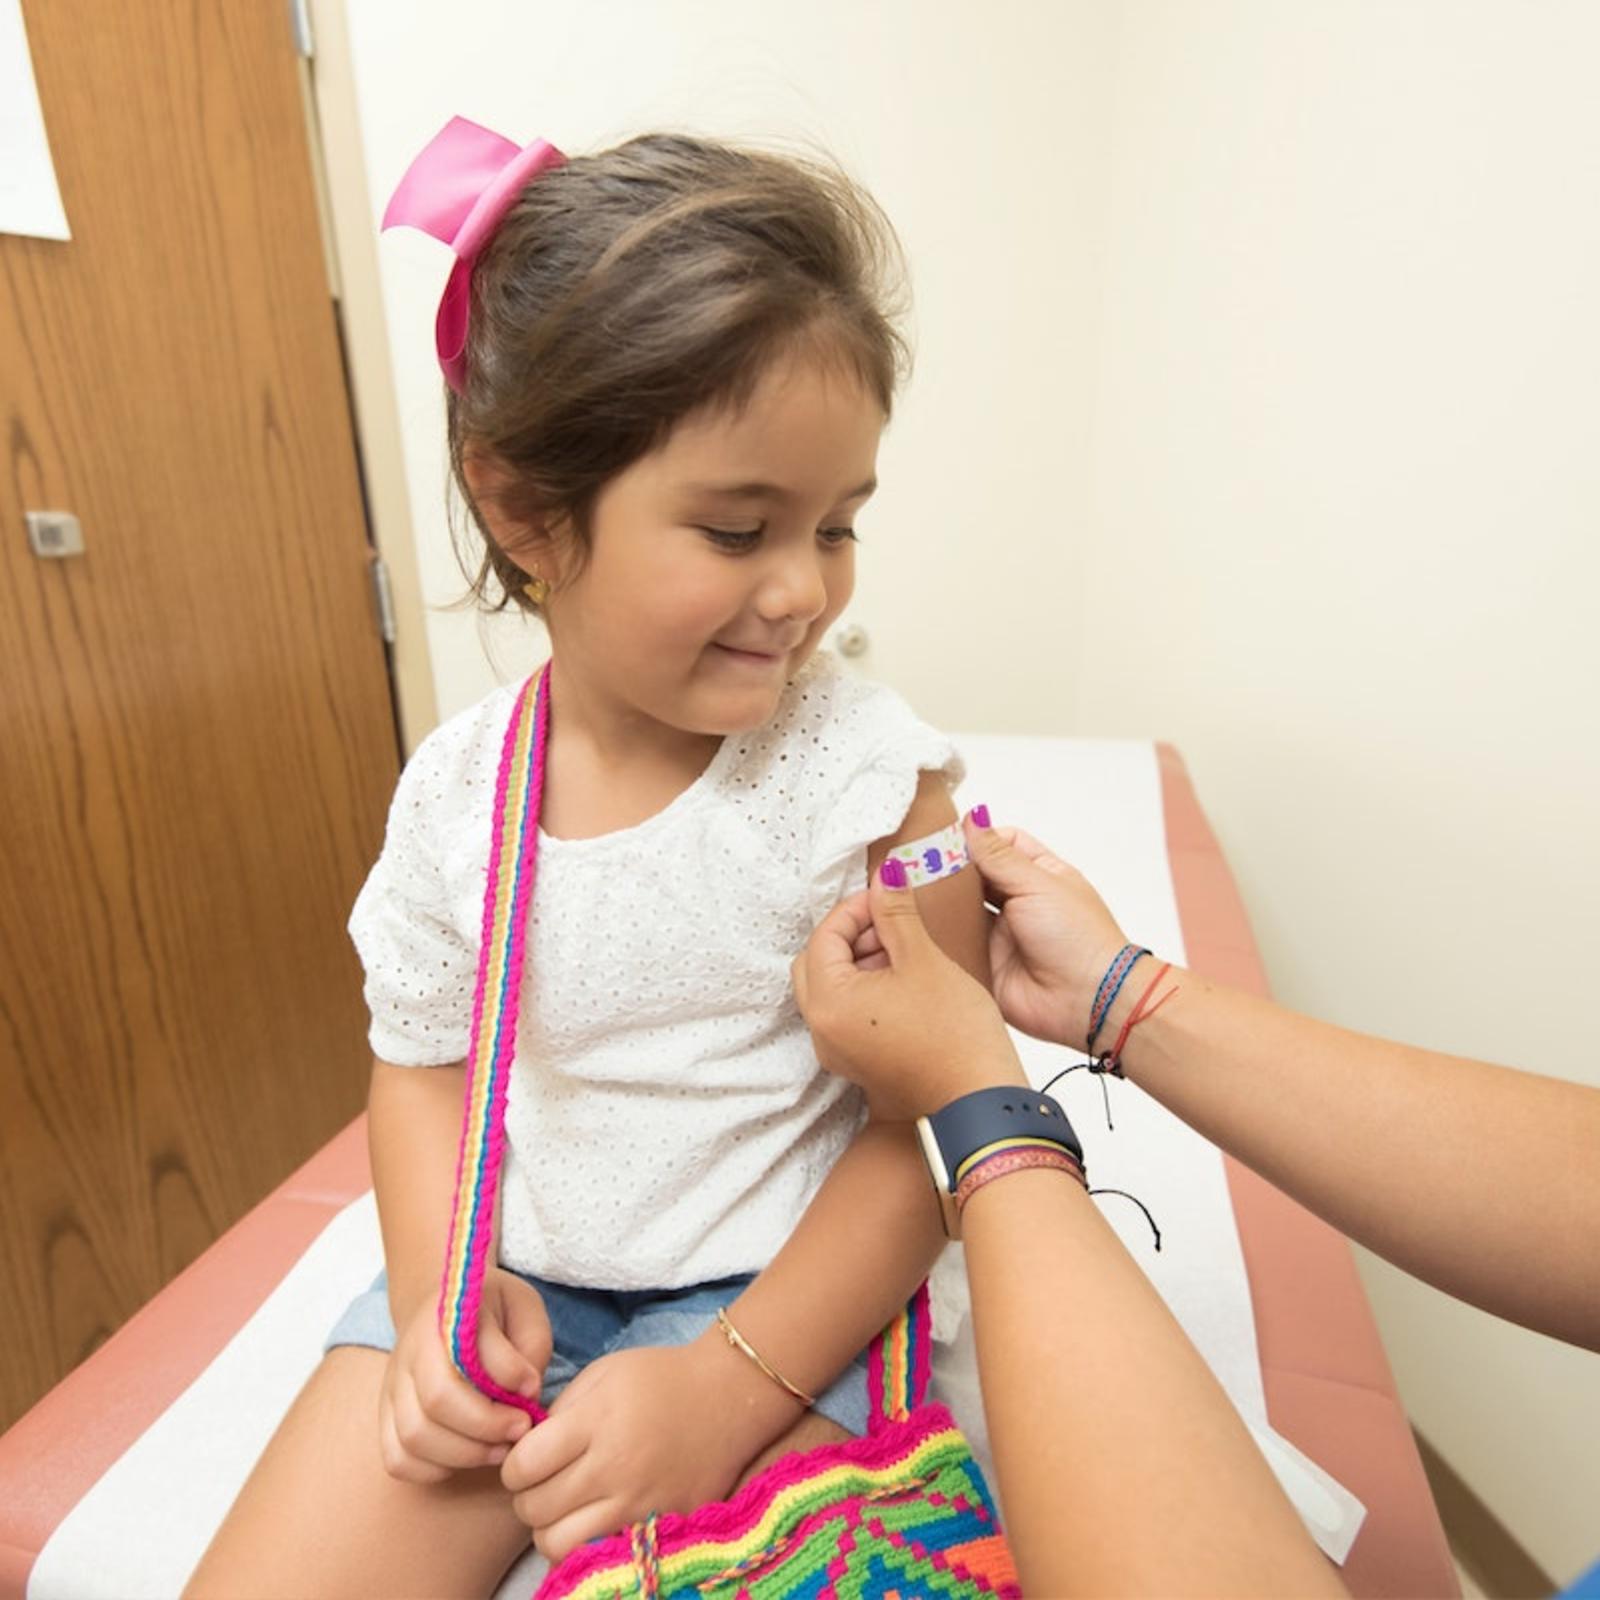 Little girl receiving bandaid on arm